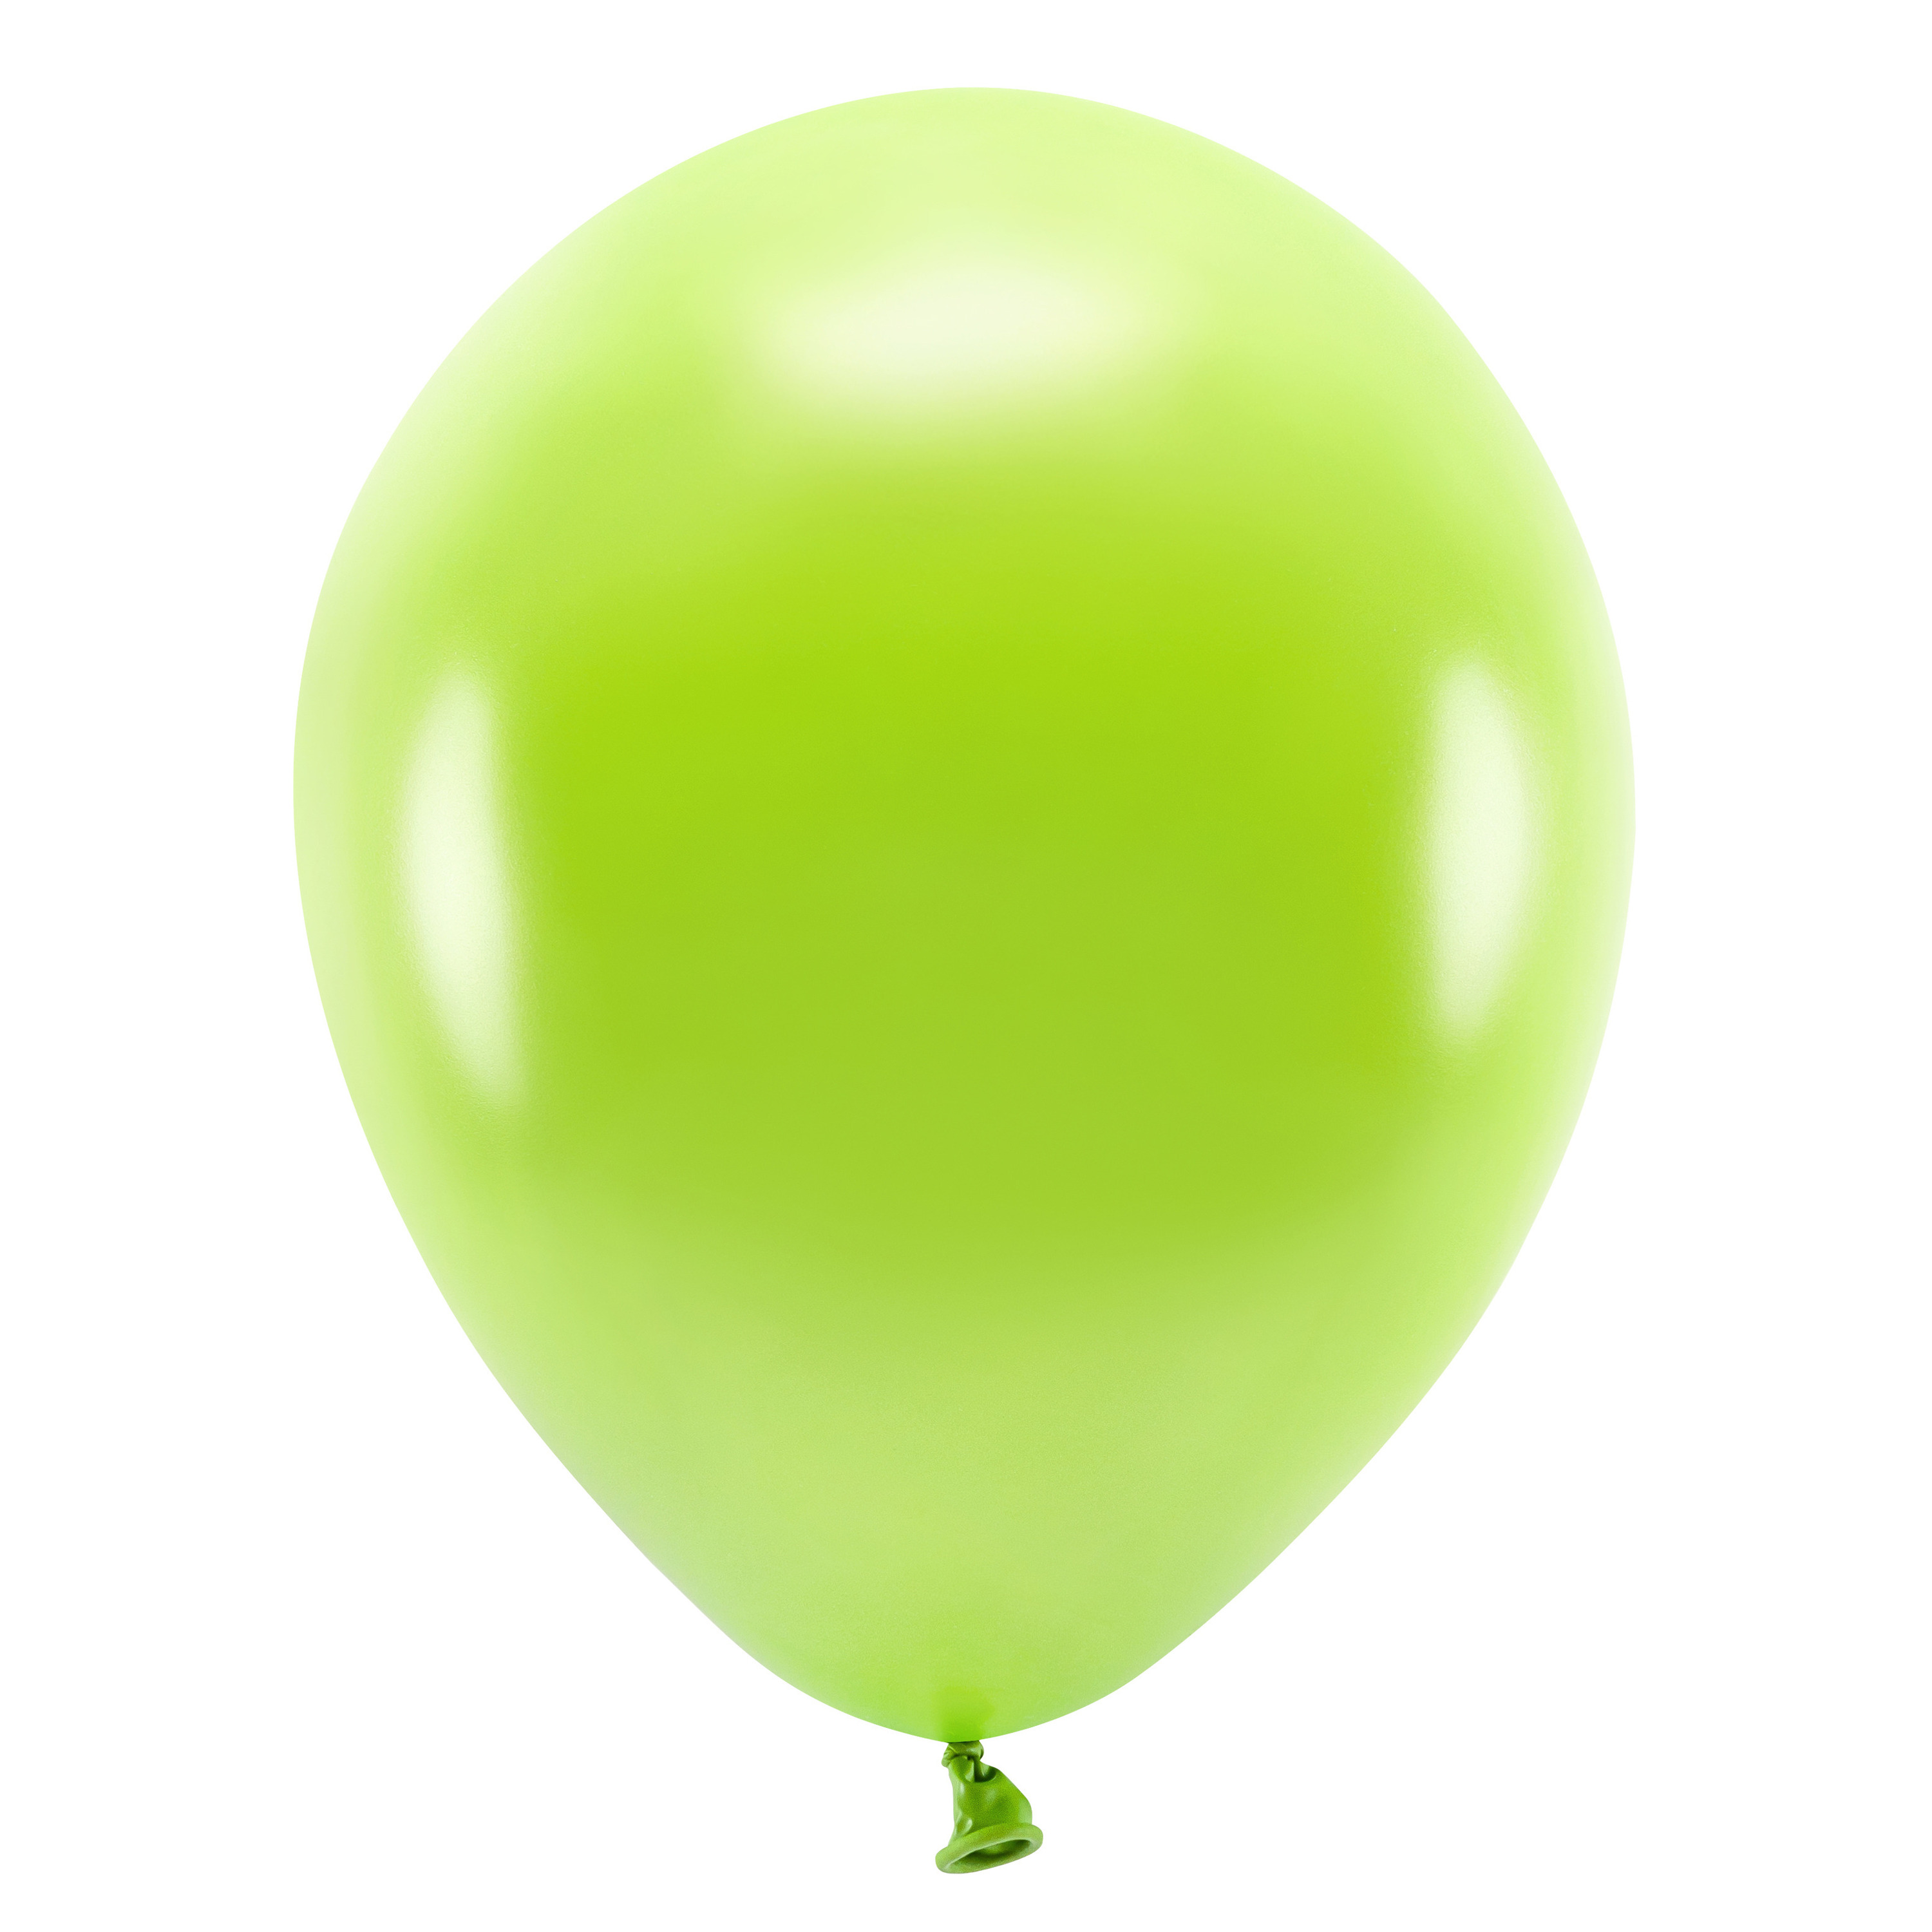 100x Lichtgroene ballonnen 26 cm eco/biologisch afbreekbaar - Milieuvriendelijke ballonnen - Feestversiering/feestdecoratie - Lichtgroen thema - Themafeest versiering - Action products